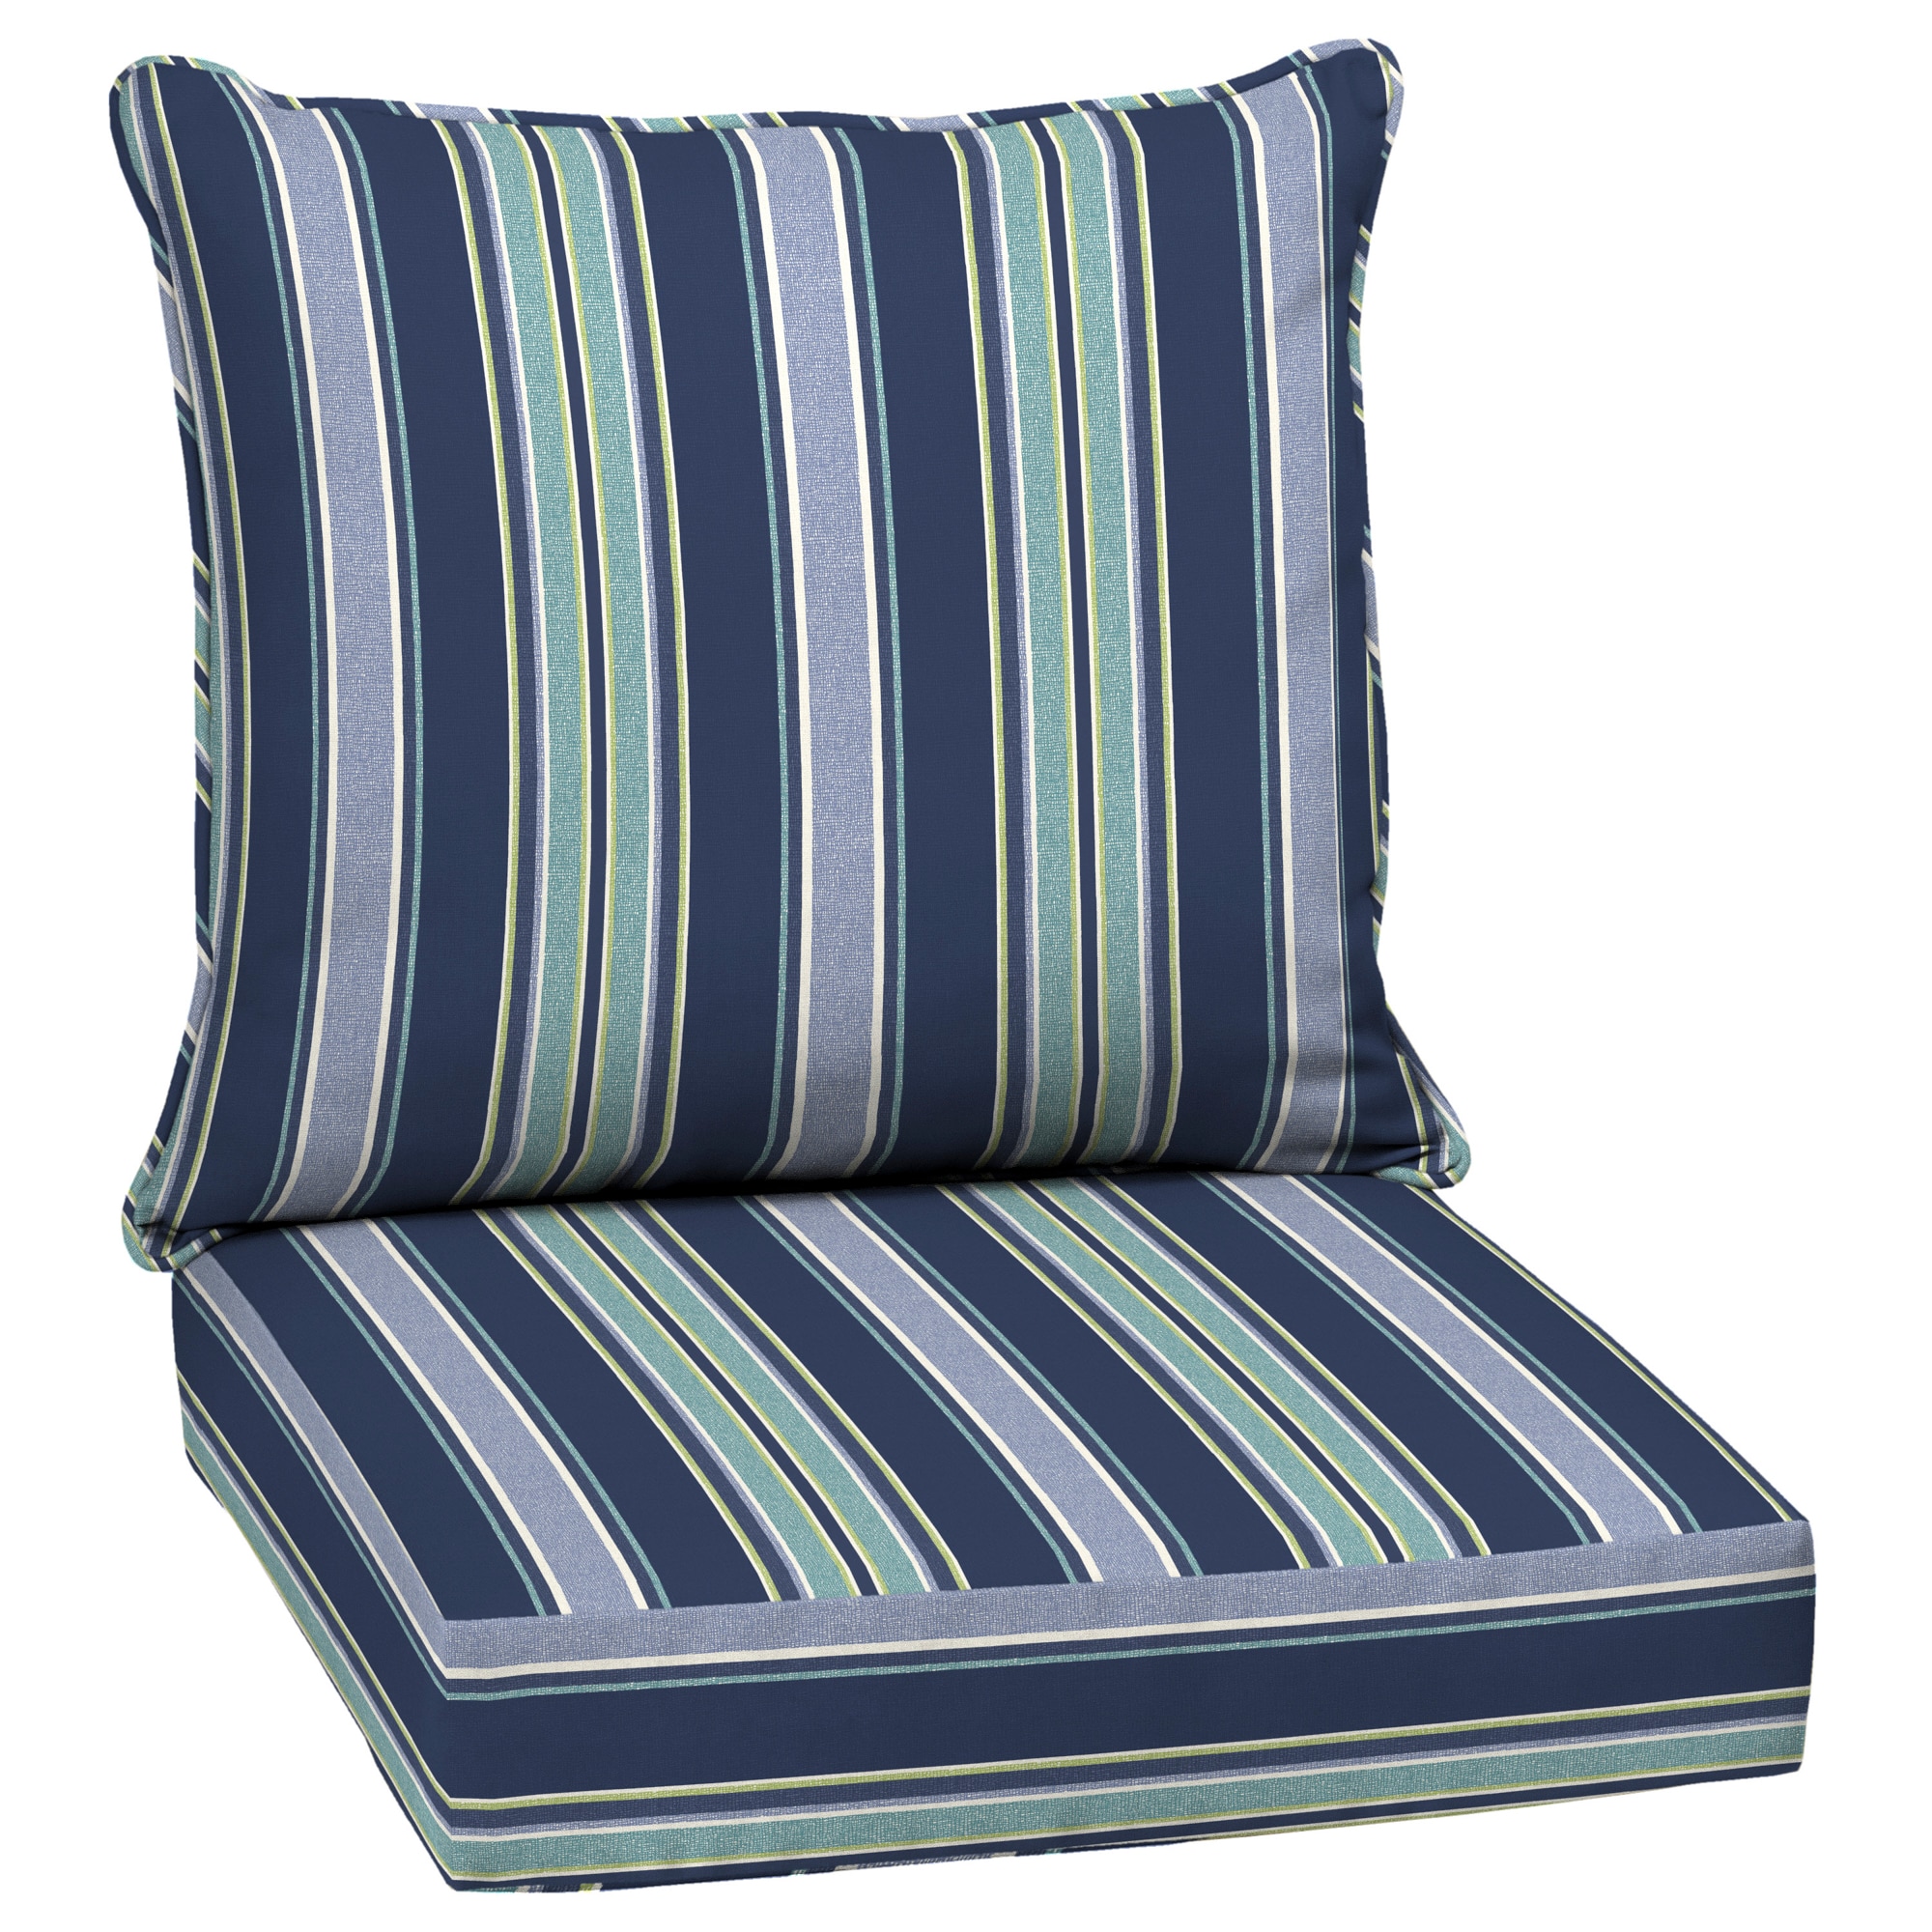 Santorini Blue Polka Dot 2 Seater Garden 4 Foot Wooden Bench Seat Pad Cushion 